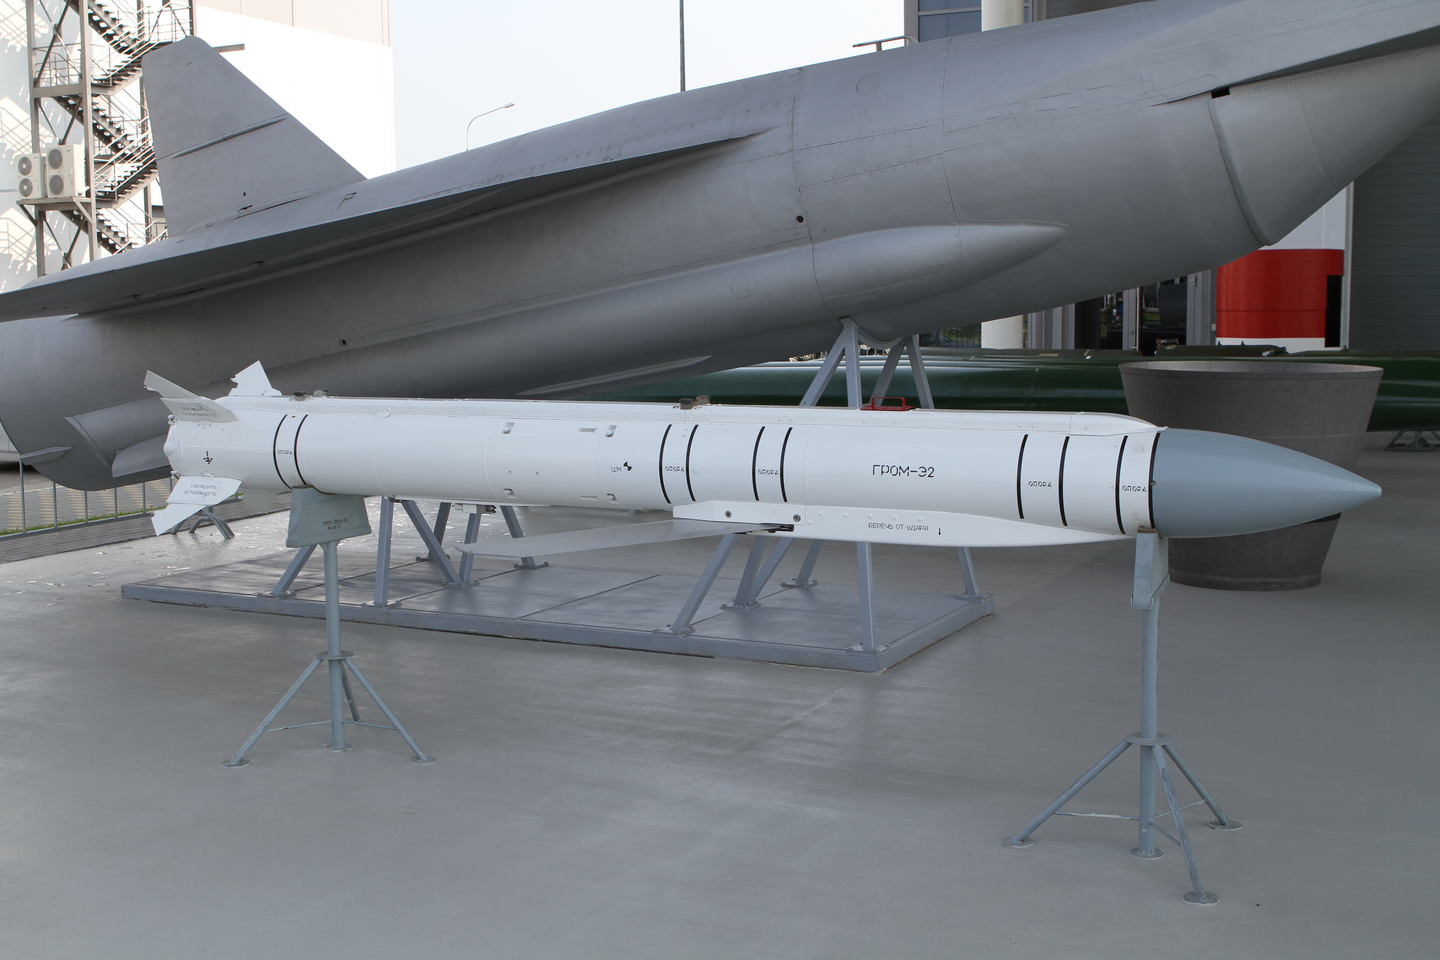 KRTV's Grom-E2 glide bomb. <em>Credit: Nickel nitride/Wikimedia Commons</em>